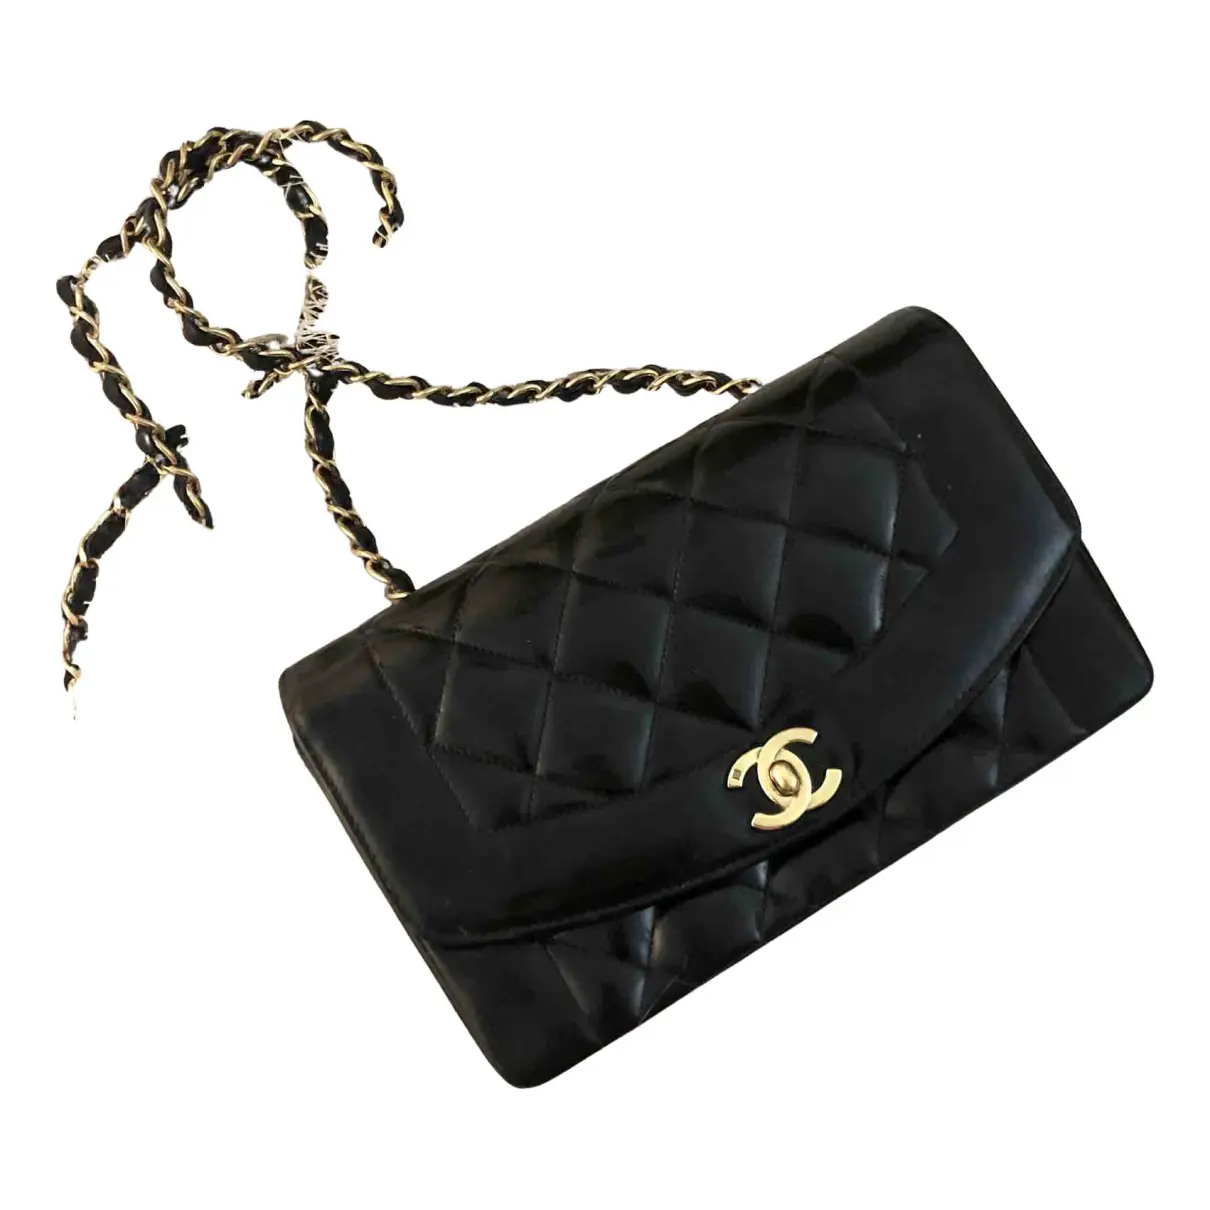 Diana patent leather bag Chanel - Vintage